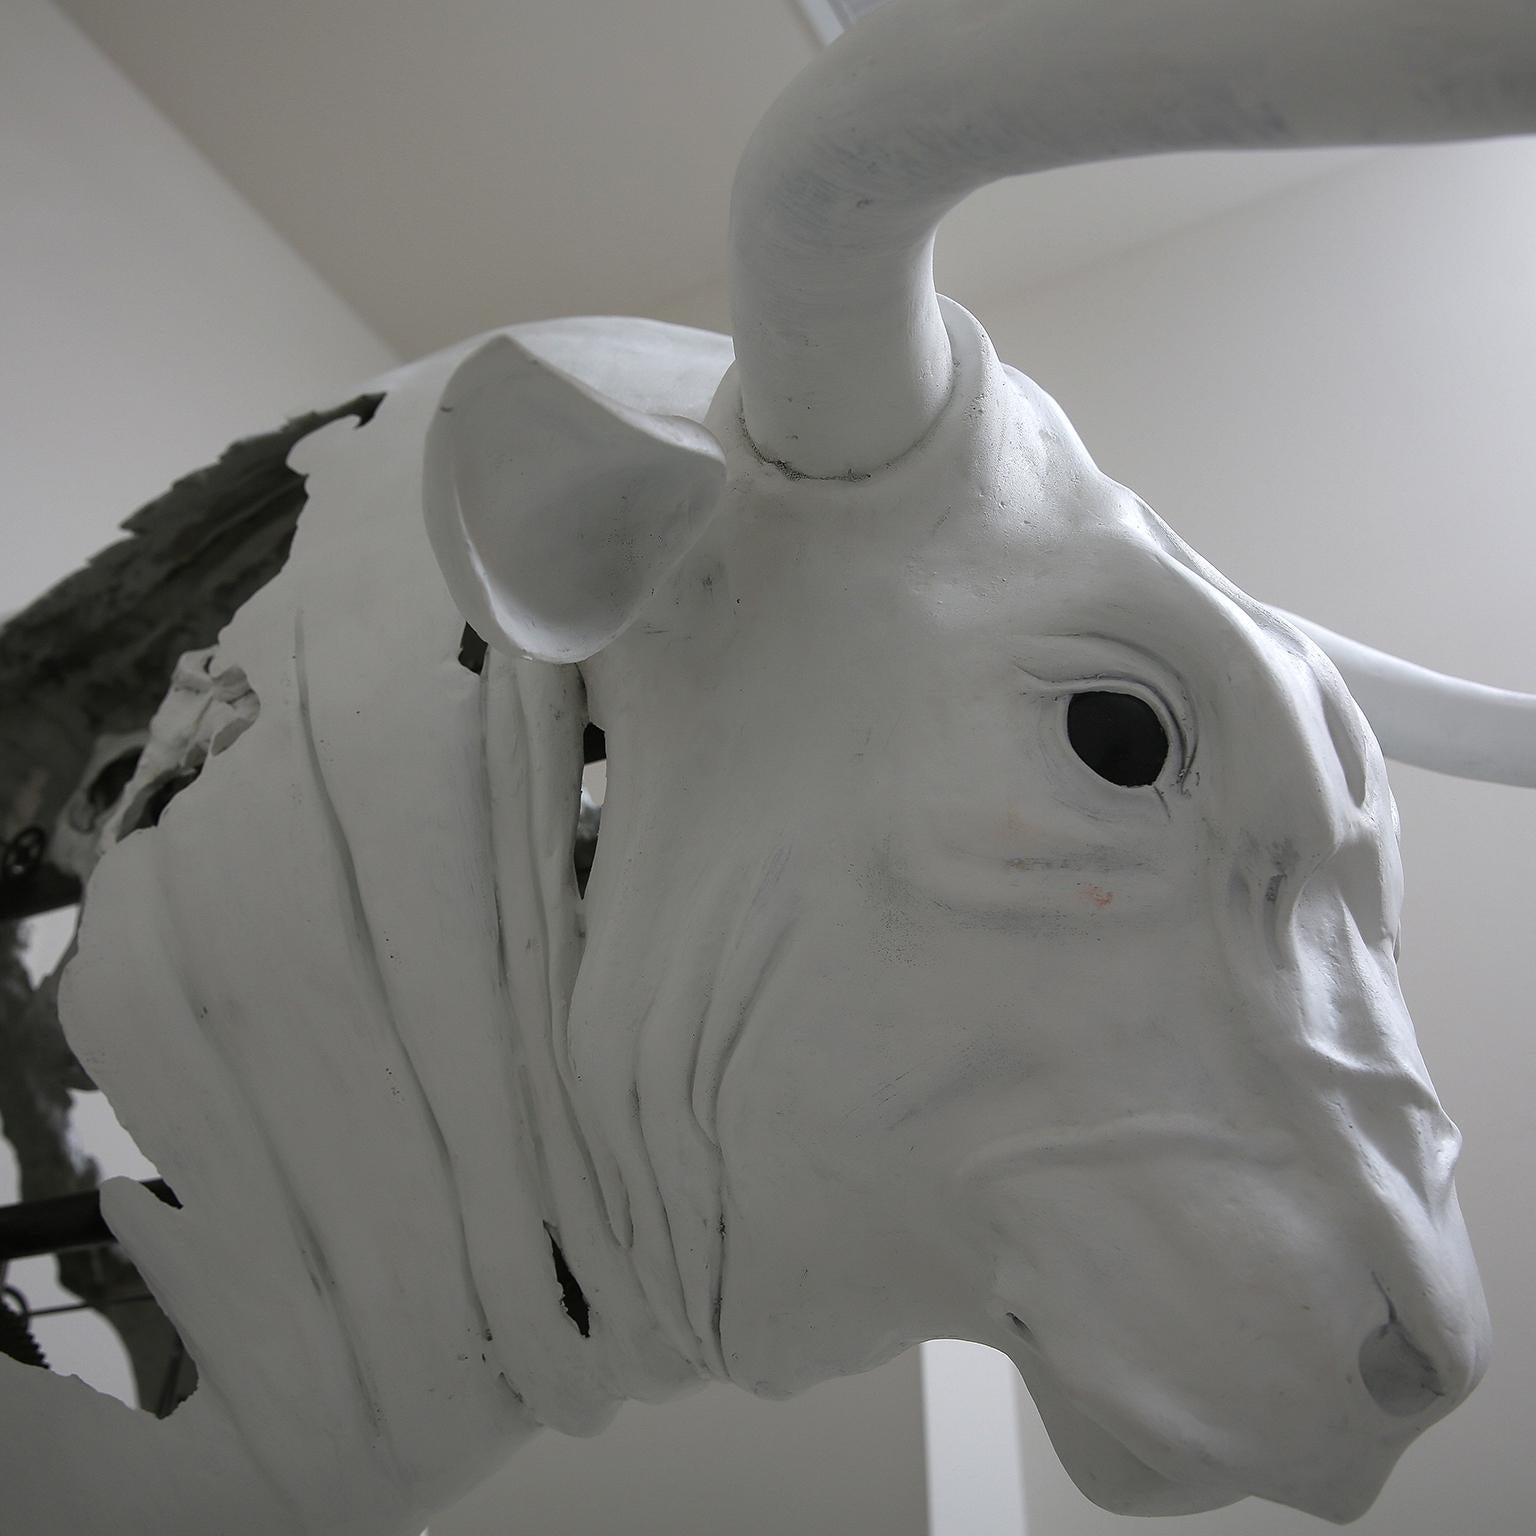 The Bull by Hobbes Vincent. White plaster and steel sculpture. Bull Bear Market 2